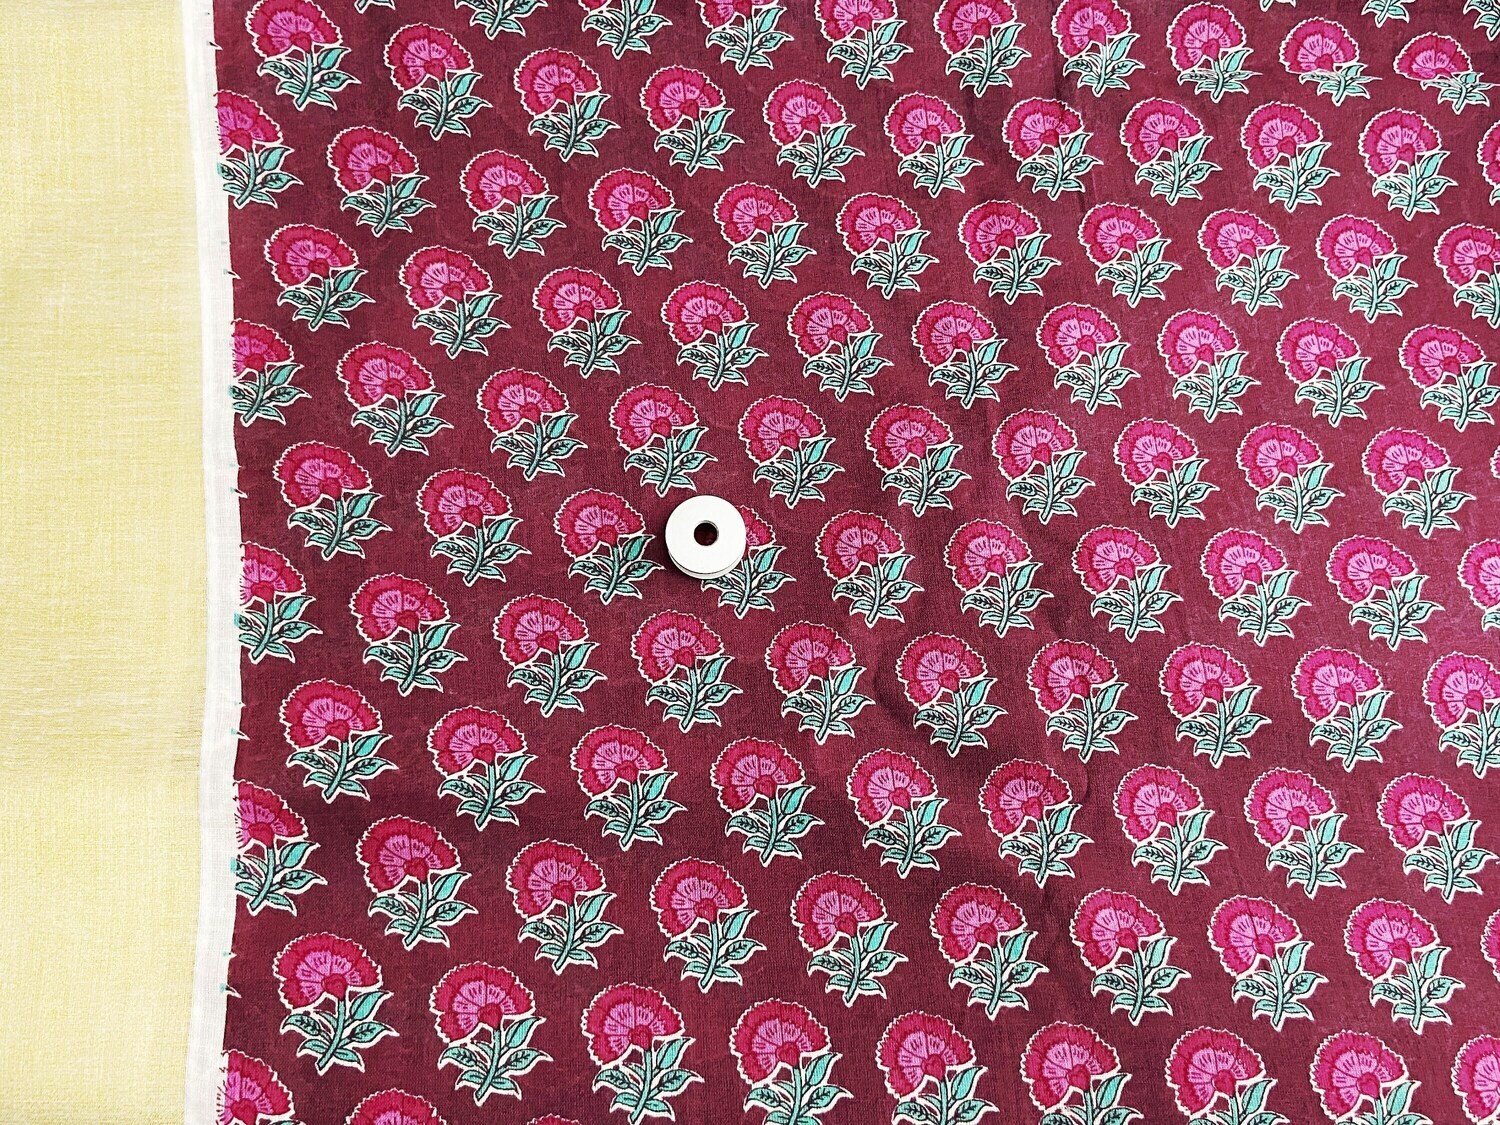 Indian Cotton Fabric with Gold Border, Chanderi Cotton Fabric, Dressmaking Sewing Crafting Fabric, Dark Pink Burgundy Fabric, Marigold Print